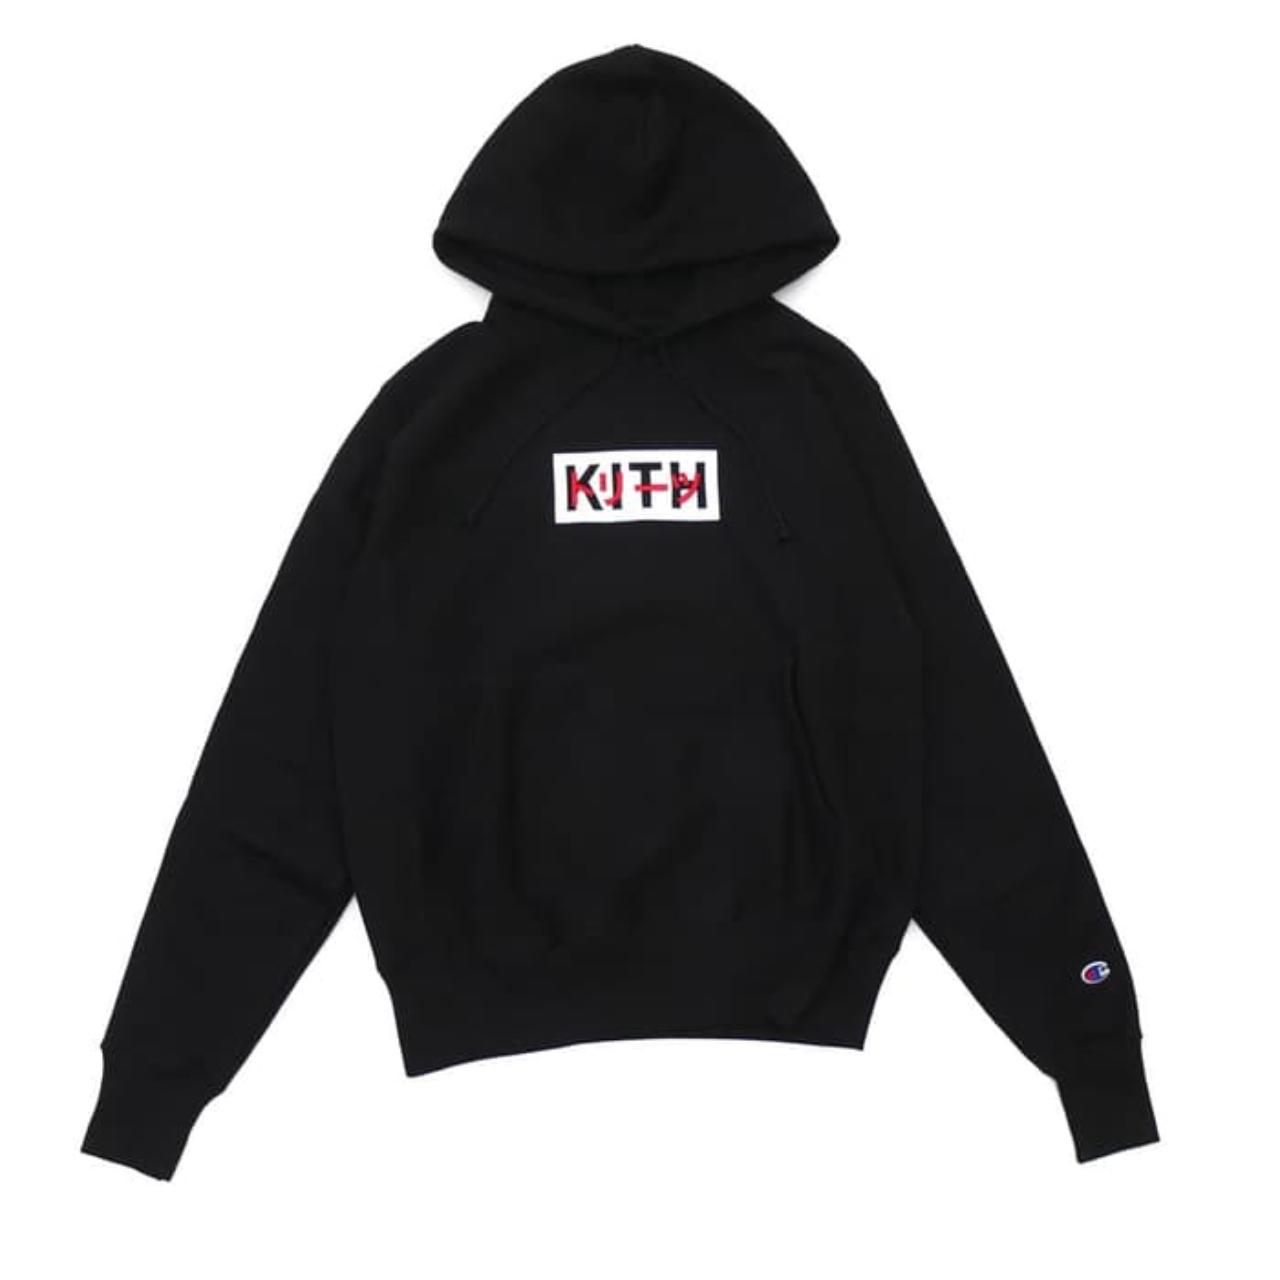 KITH TREATS TOKYO 1st anniversary hoodie black... - Depop